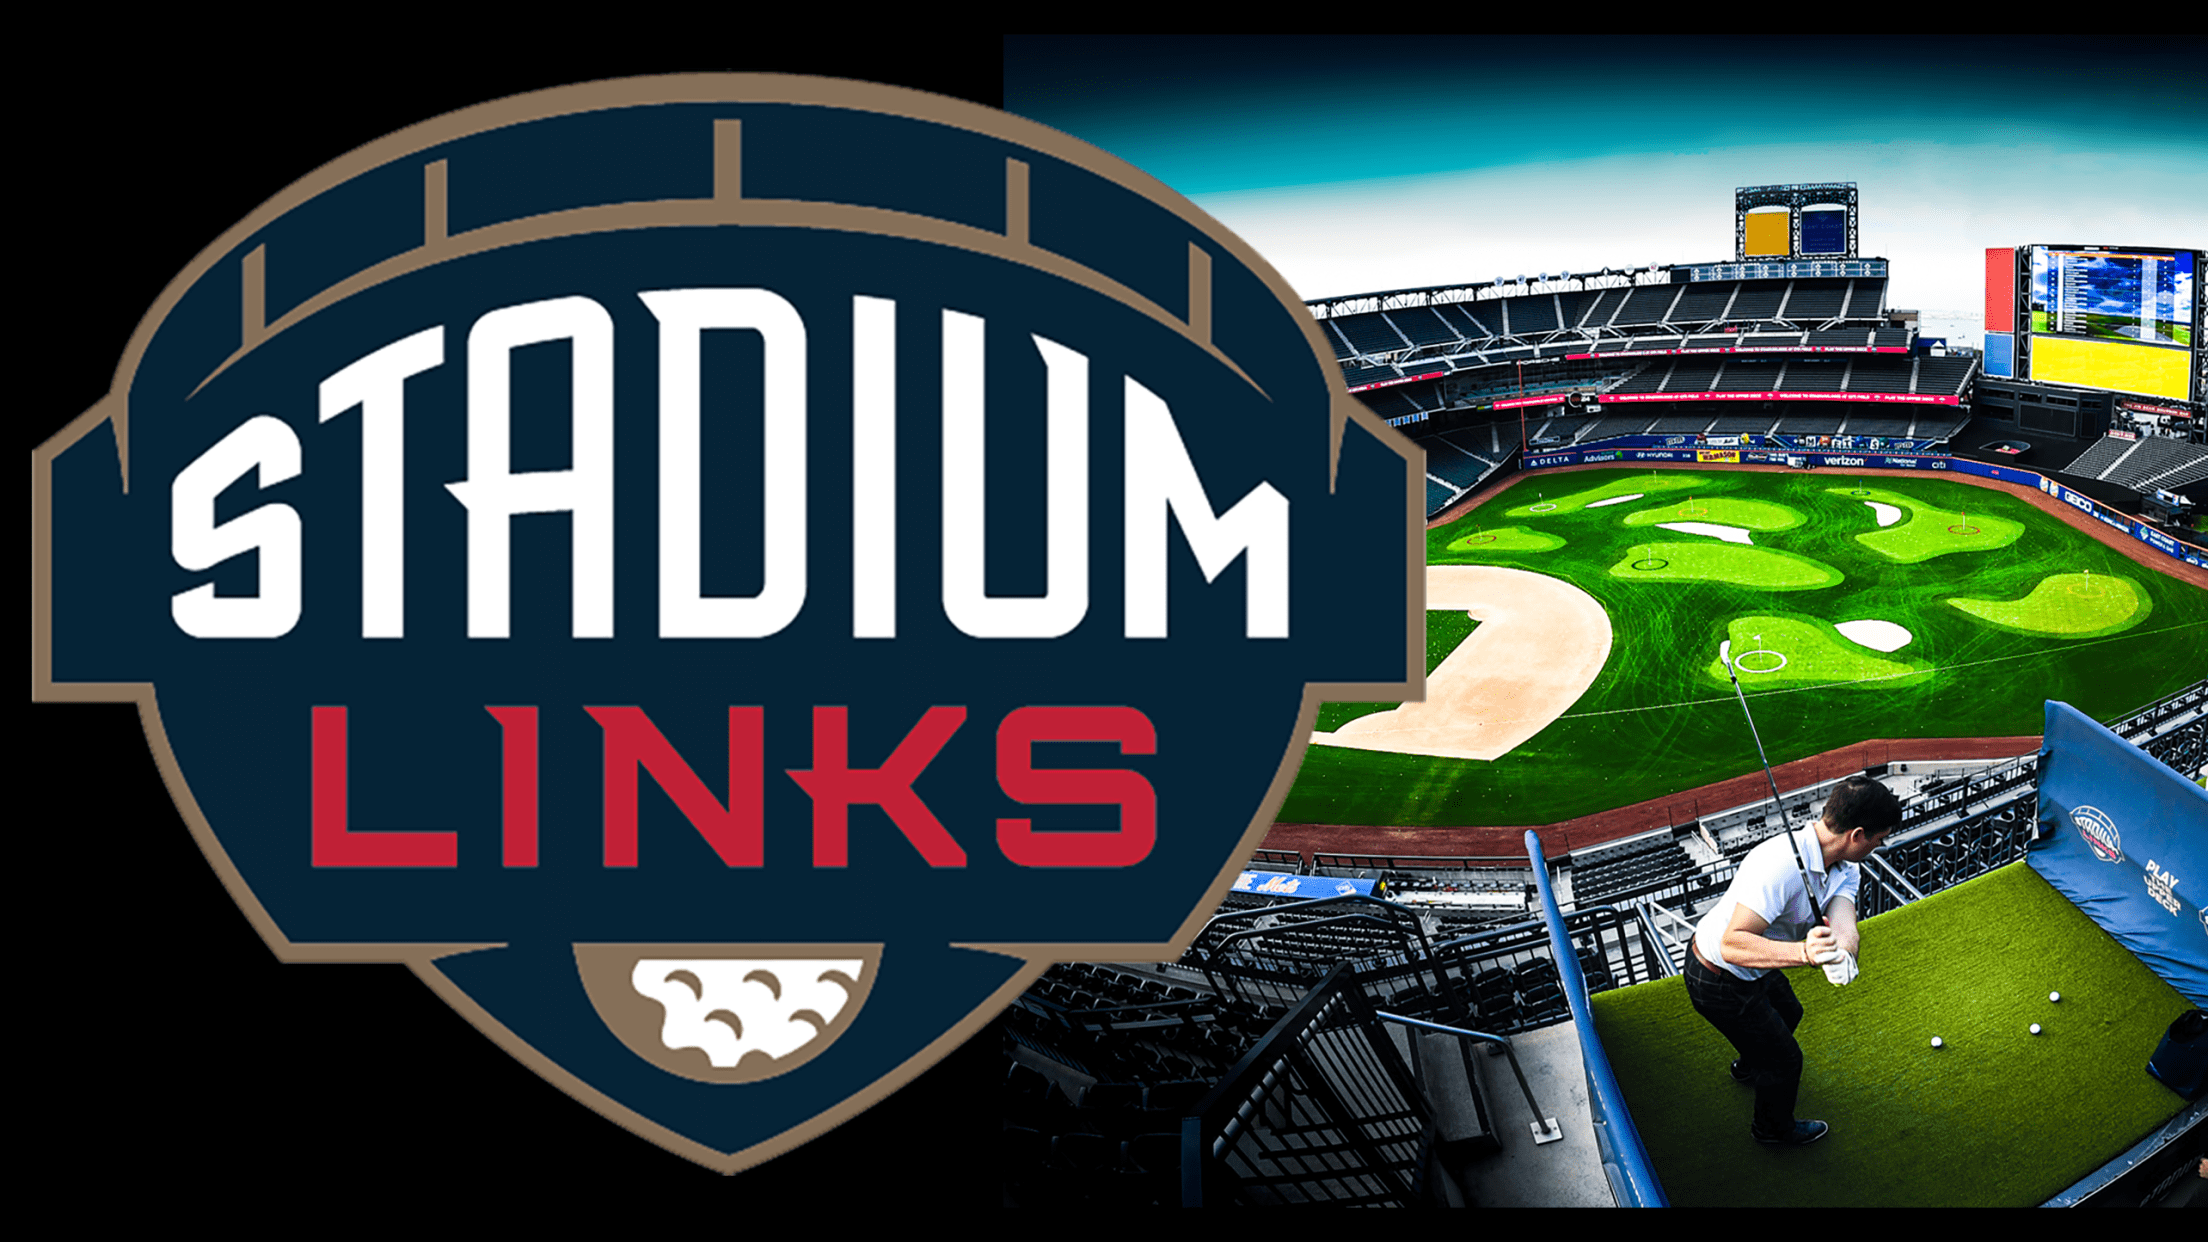 StadiumLinks Golf Visiting Four MLB Stadiums in November